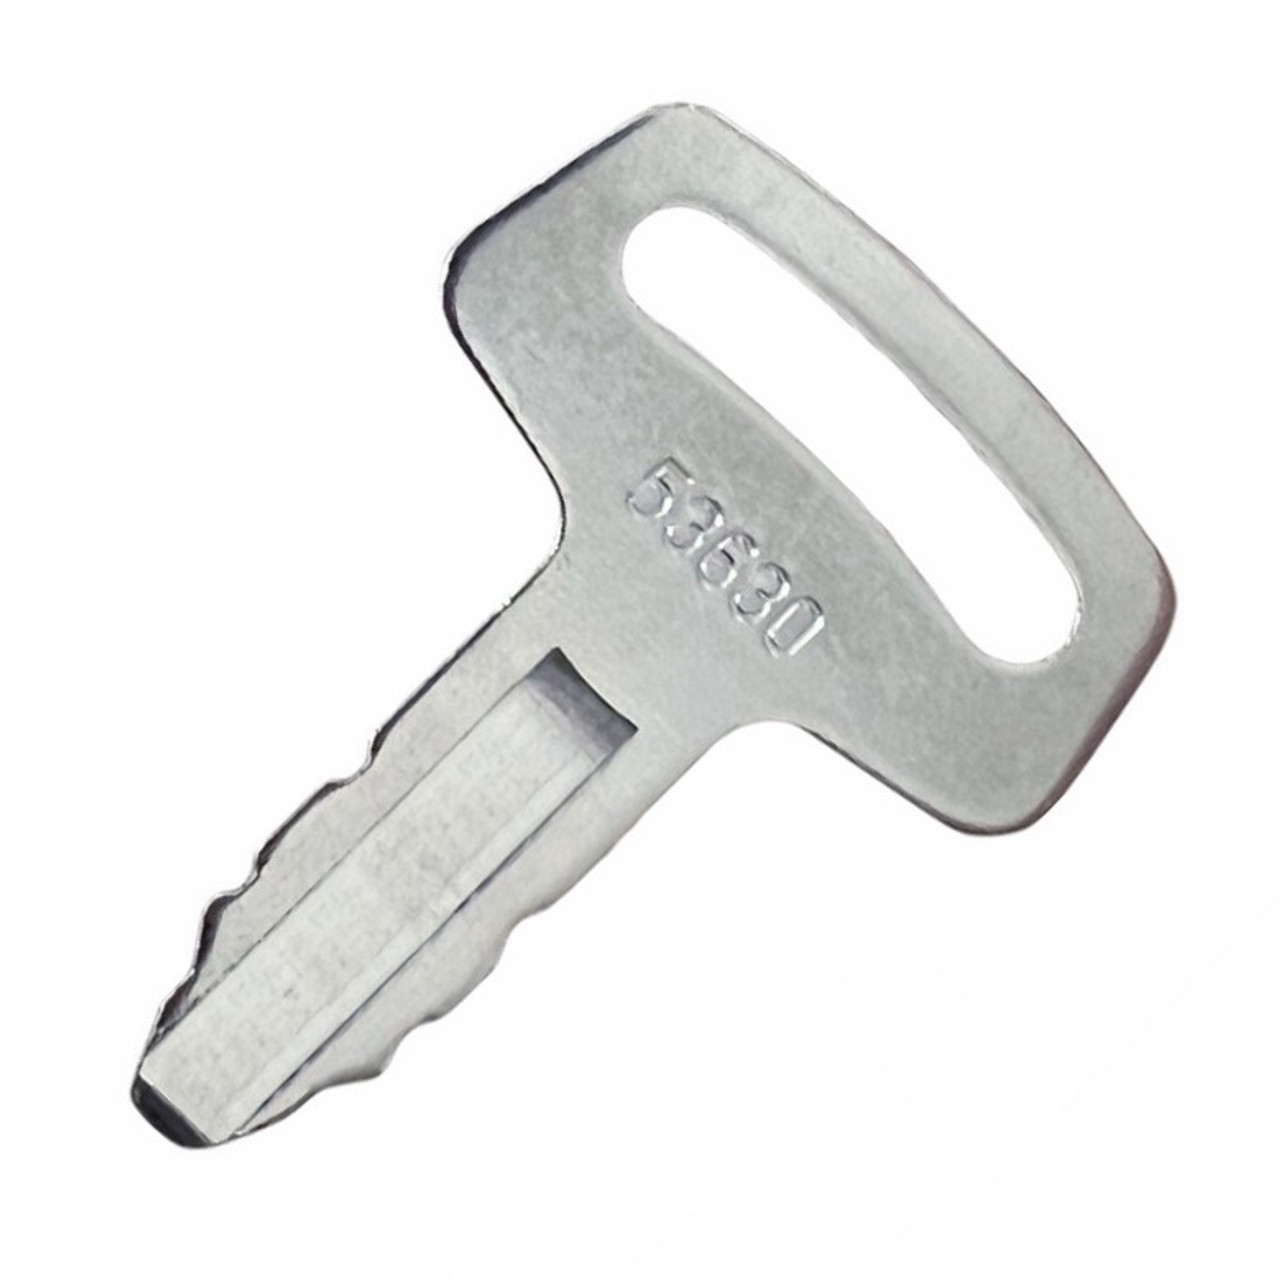 Fecon Ignition Key 416-55-001-08